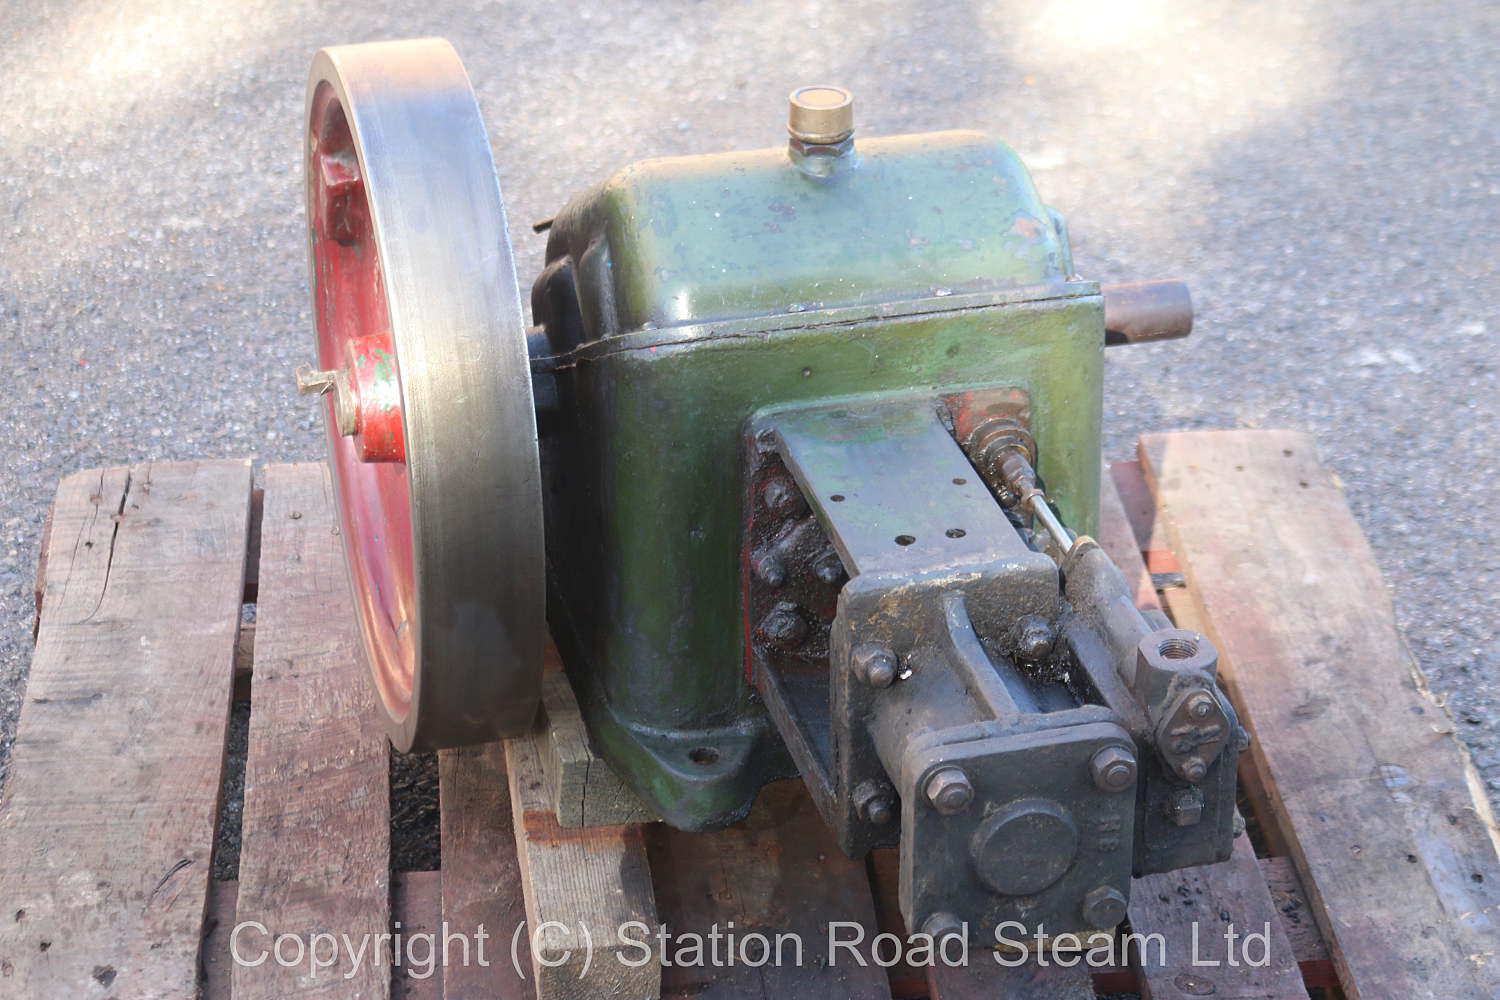 Horizontal enclosed crank steam engine with governor